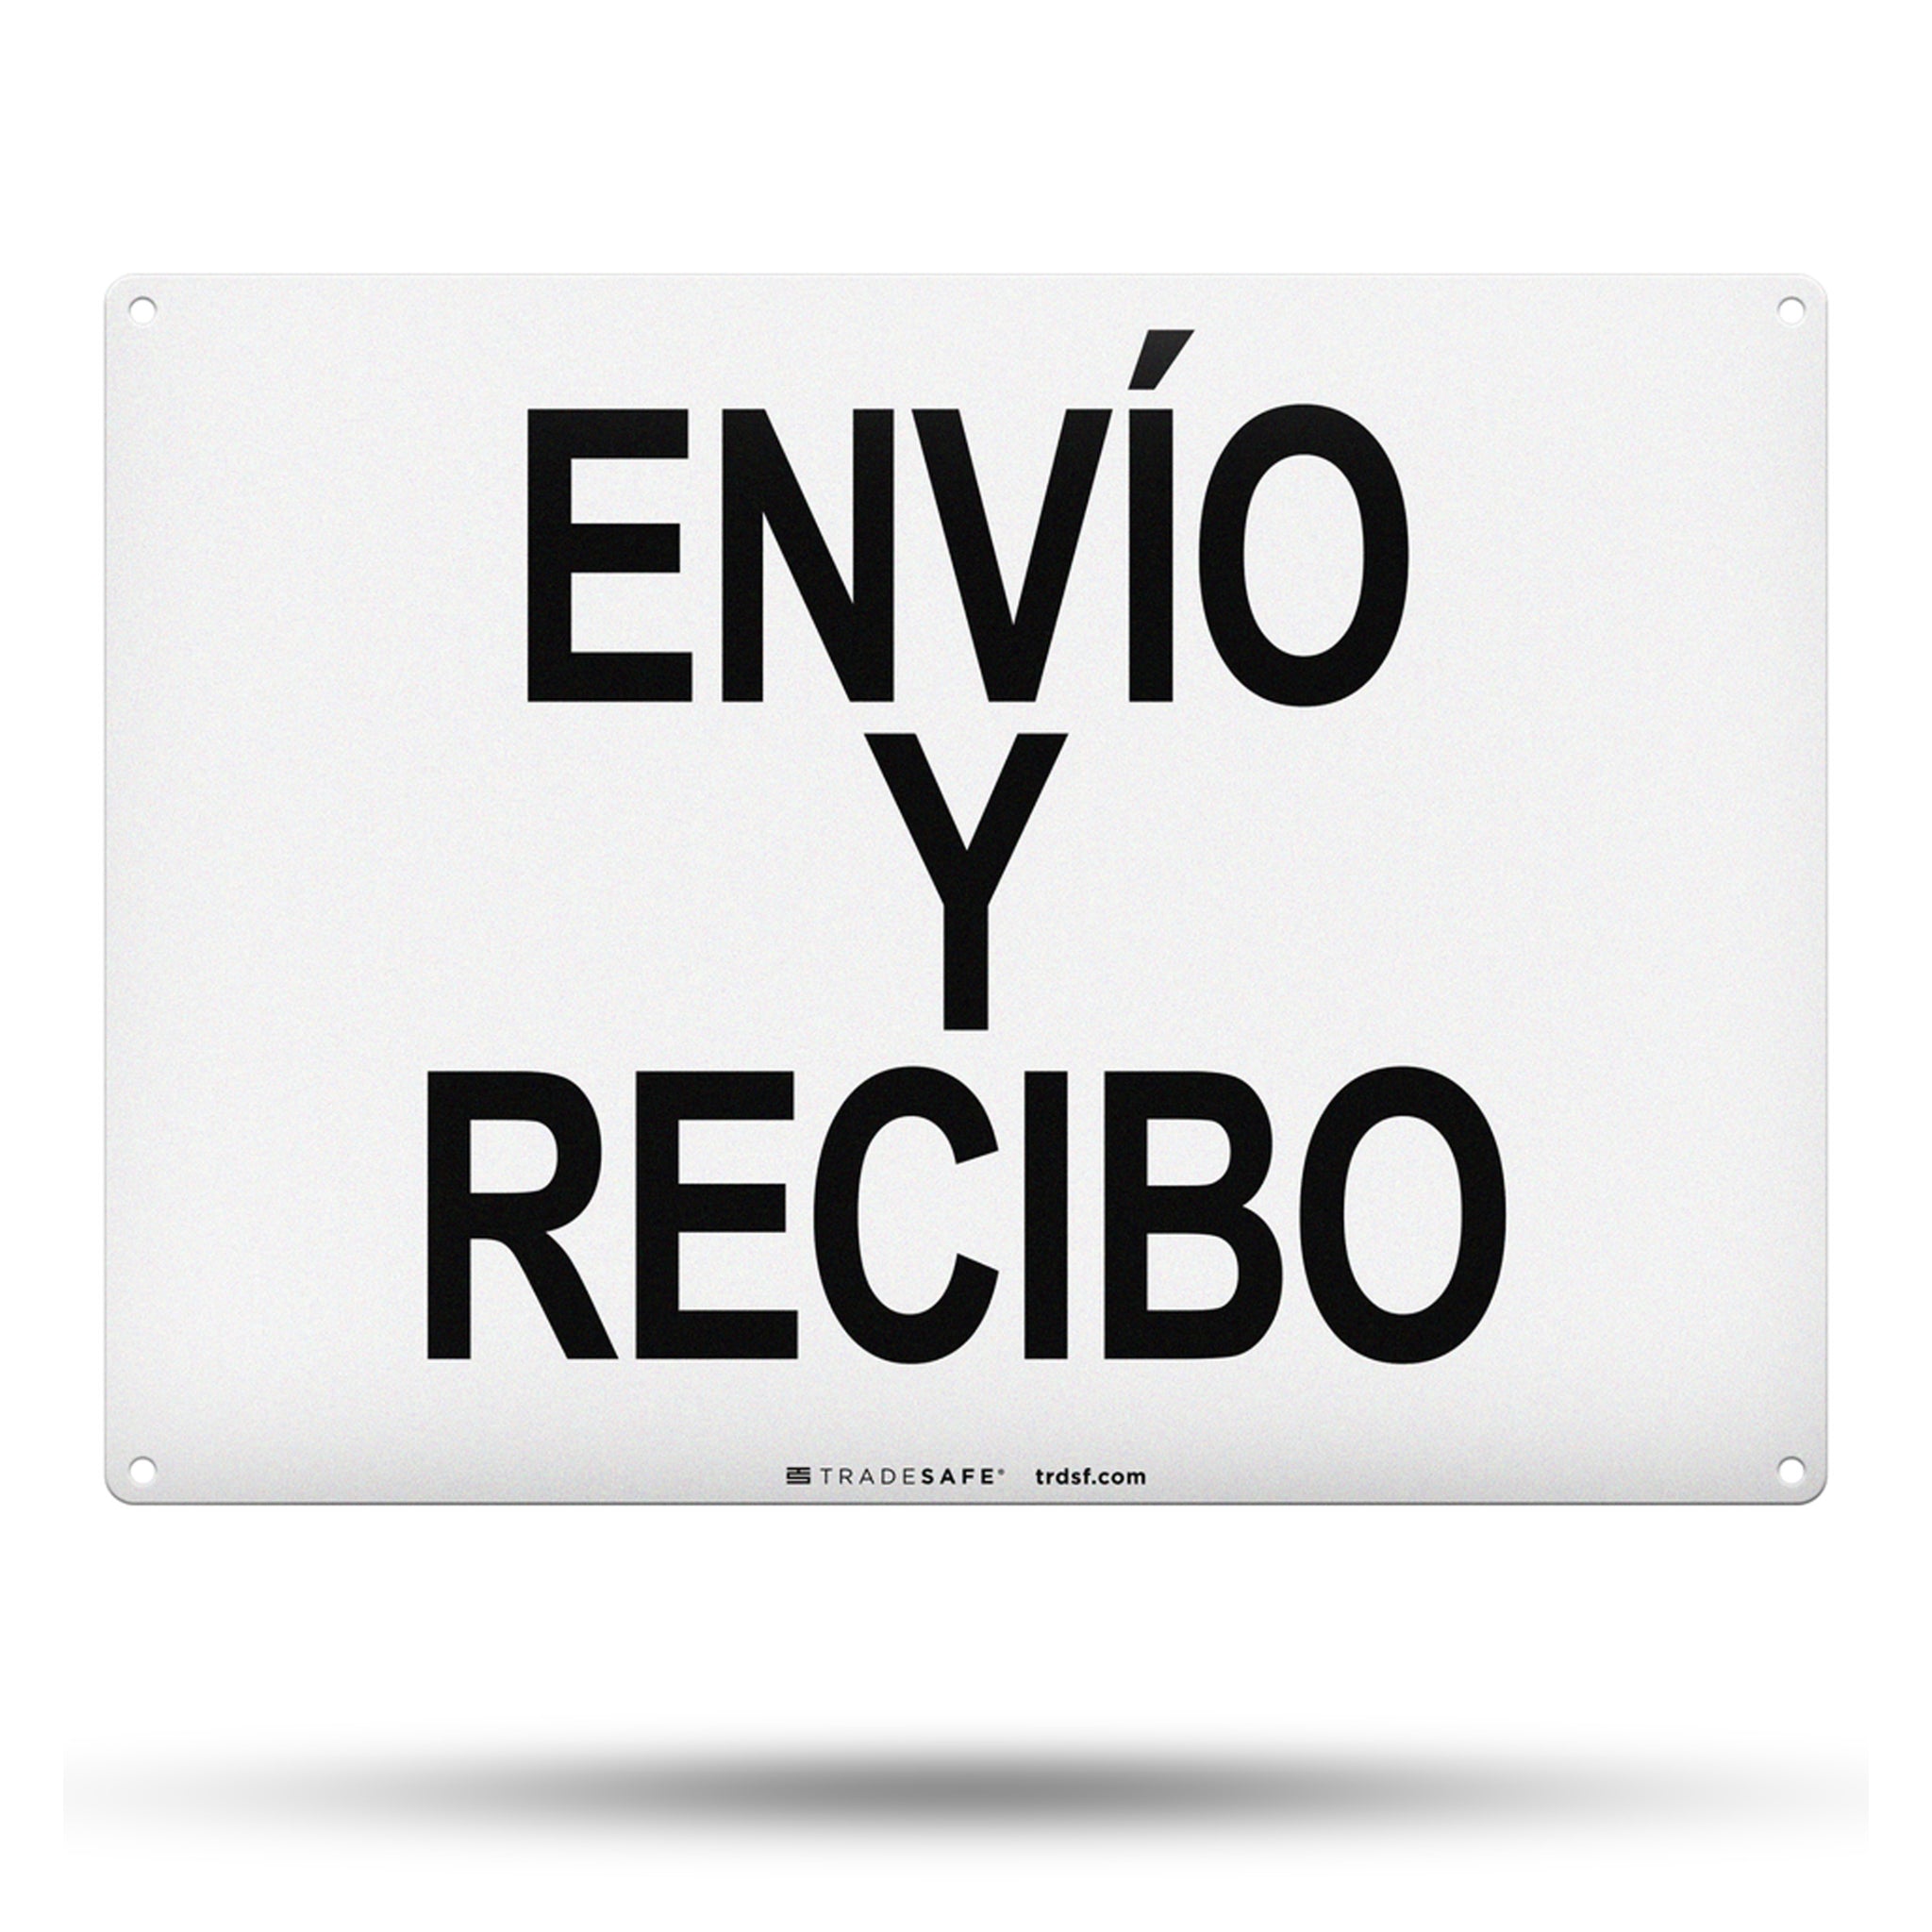 Envío y Recibo (Shipping and Receiving) Aluminum Sign